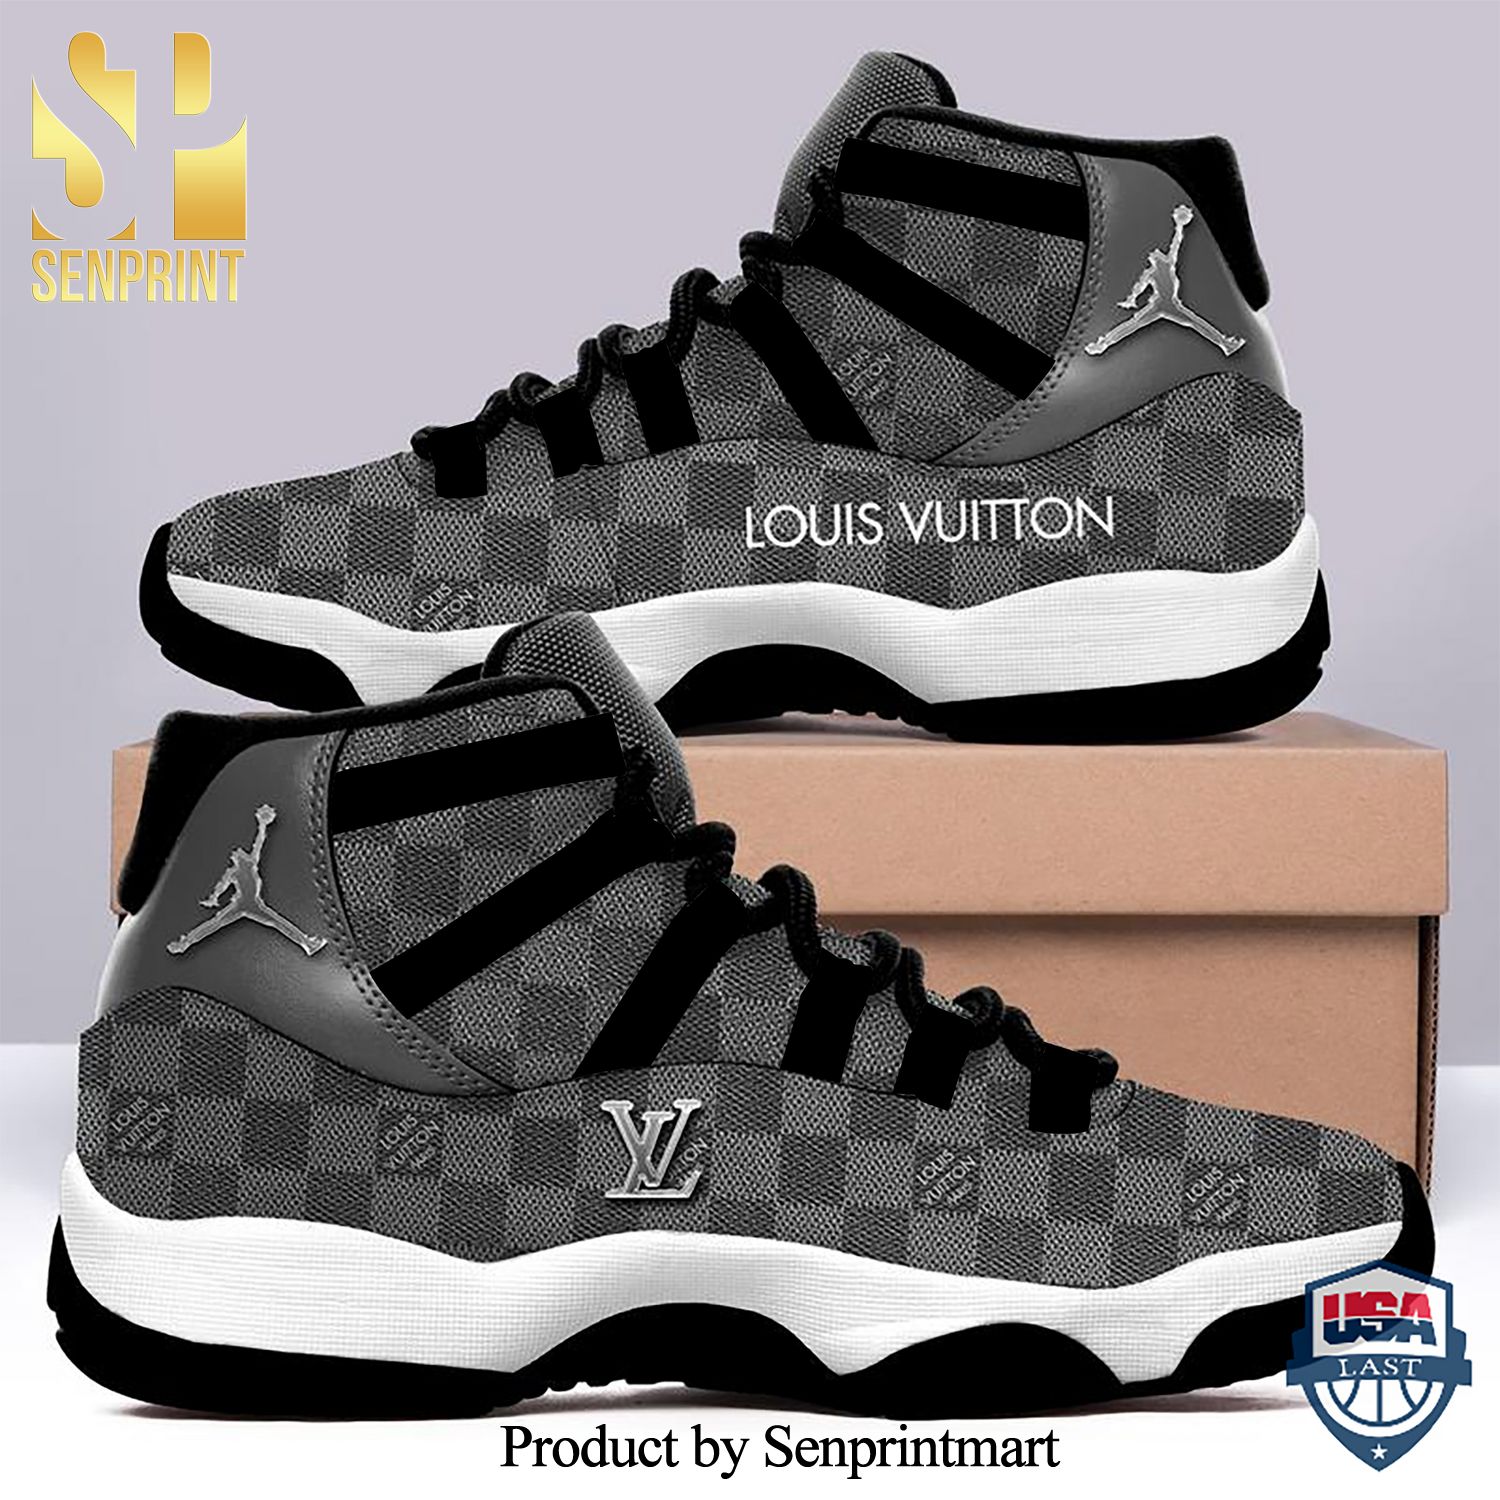 Louis vuitton Full Print Air Jordan 11